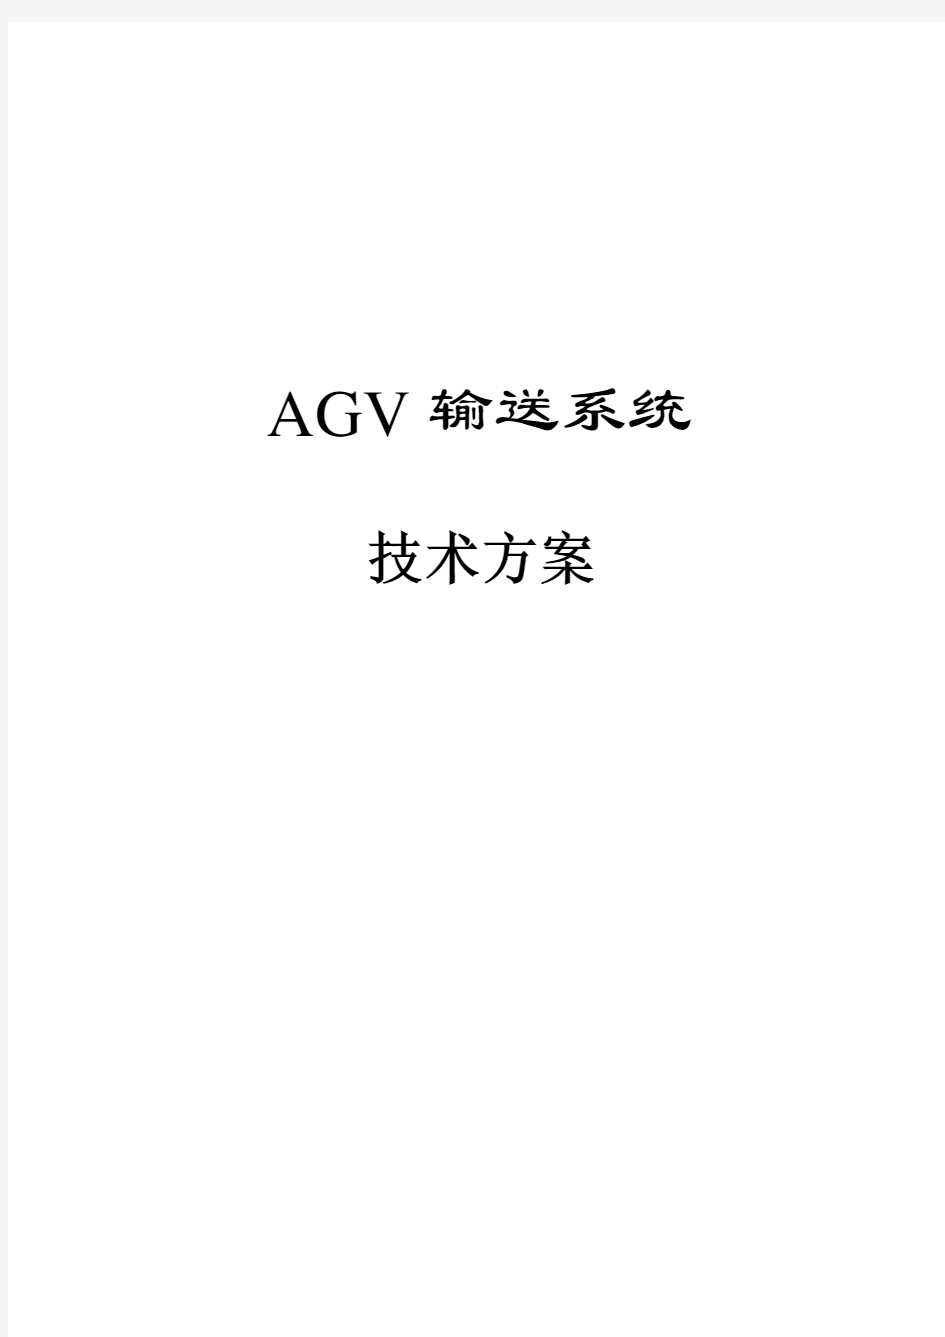 AGV方案